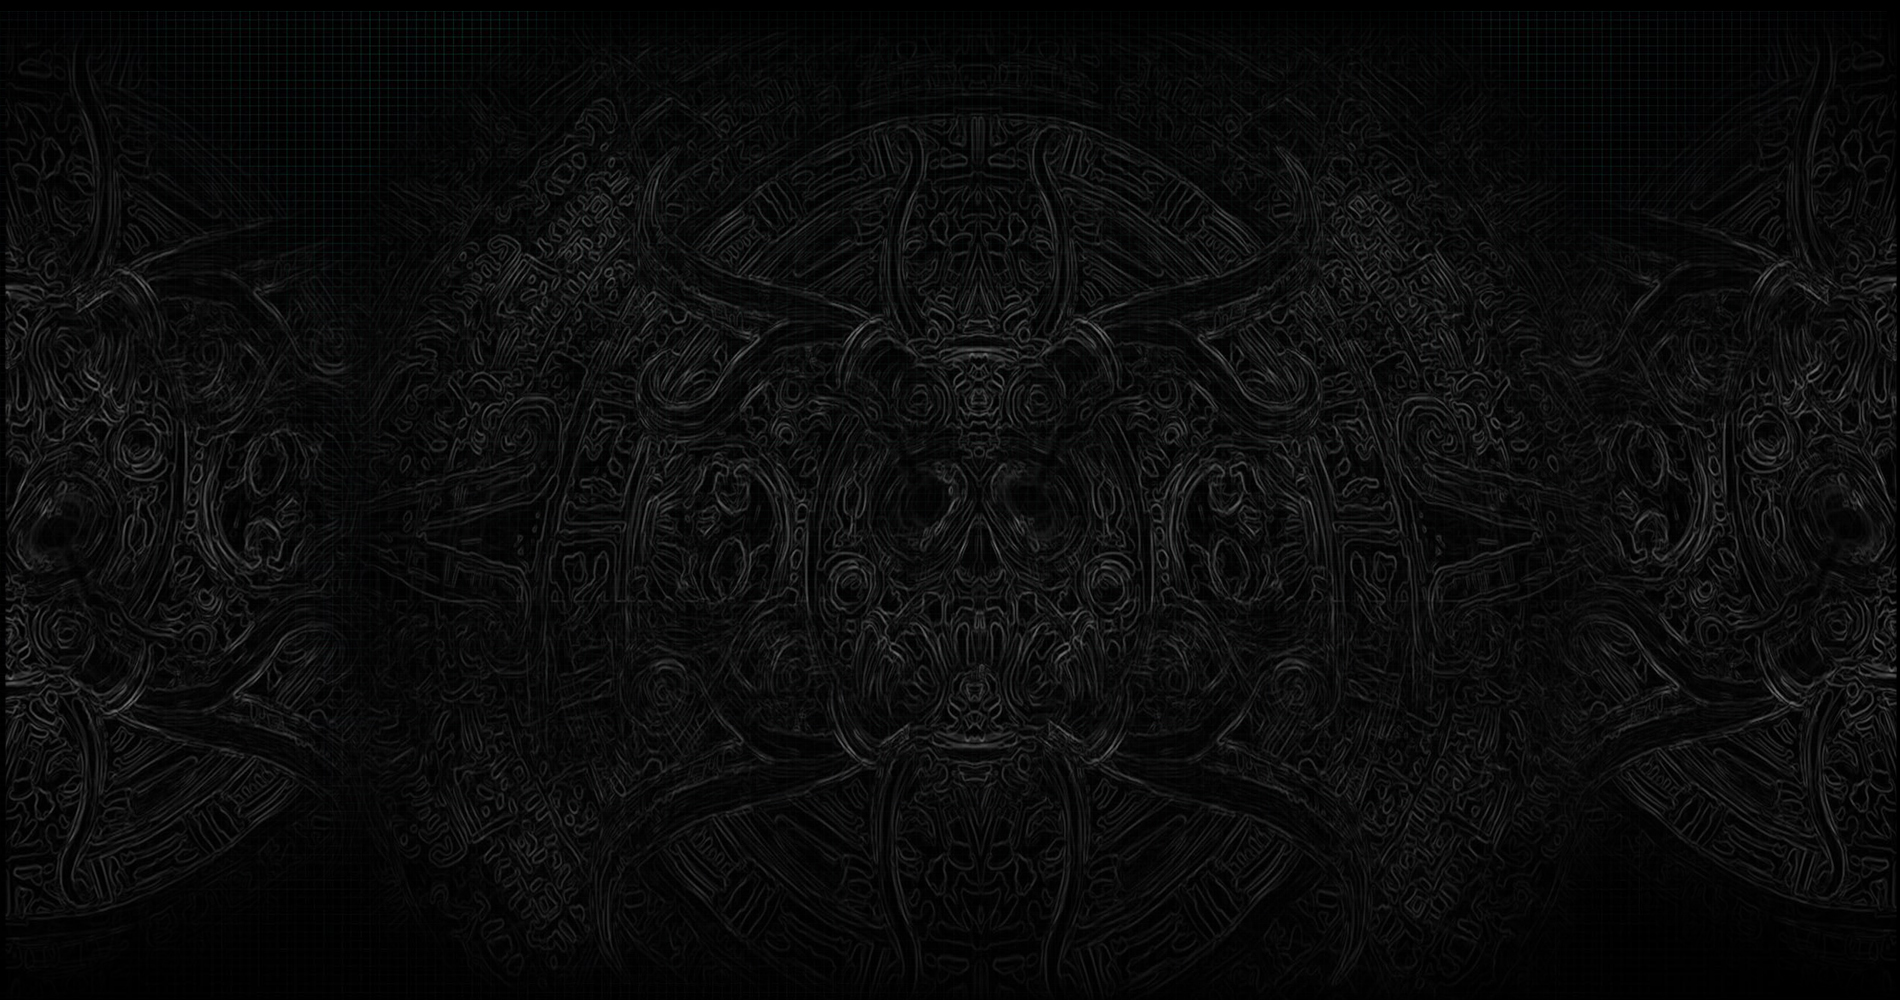 General 1900x1000 skull demon dark artwork fantasy art black symmetry